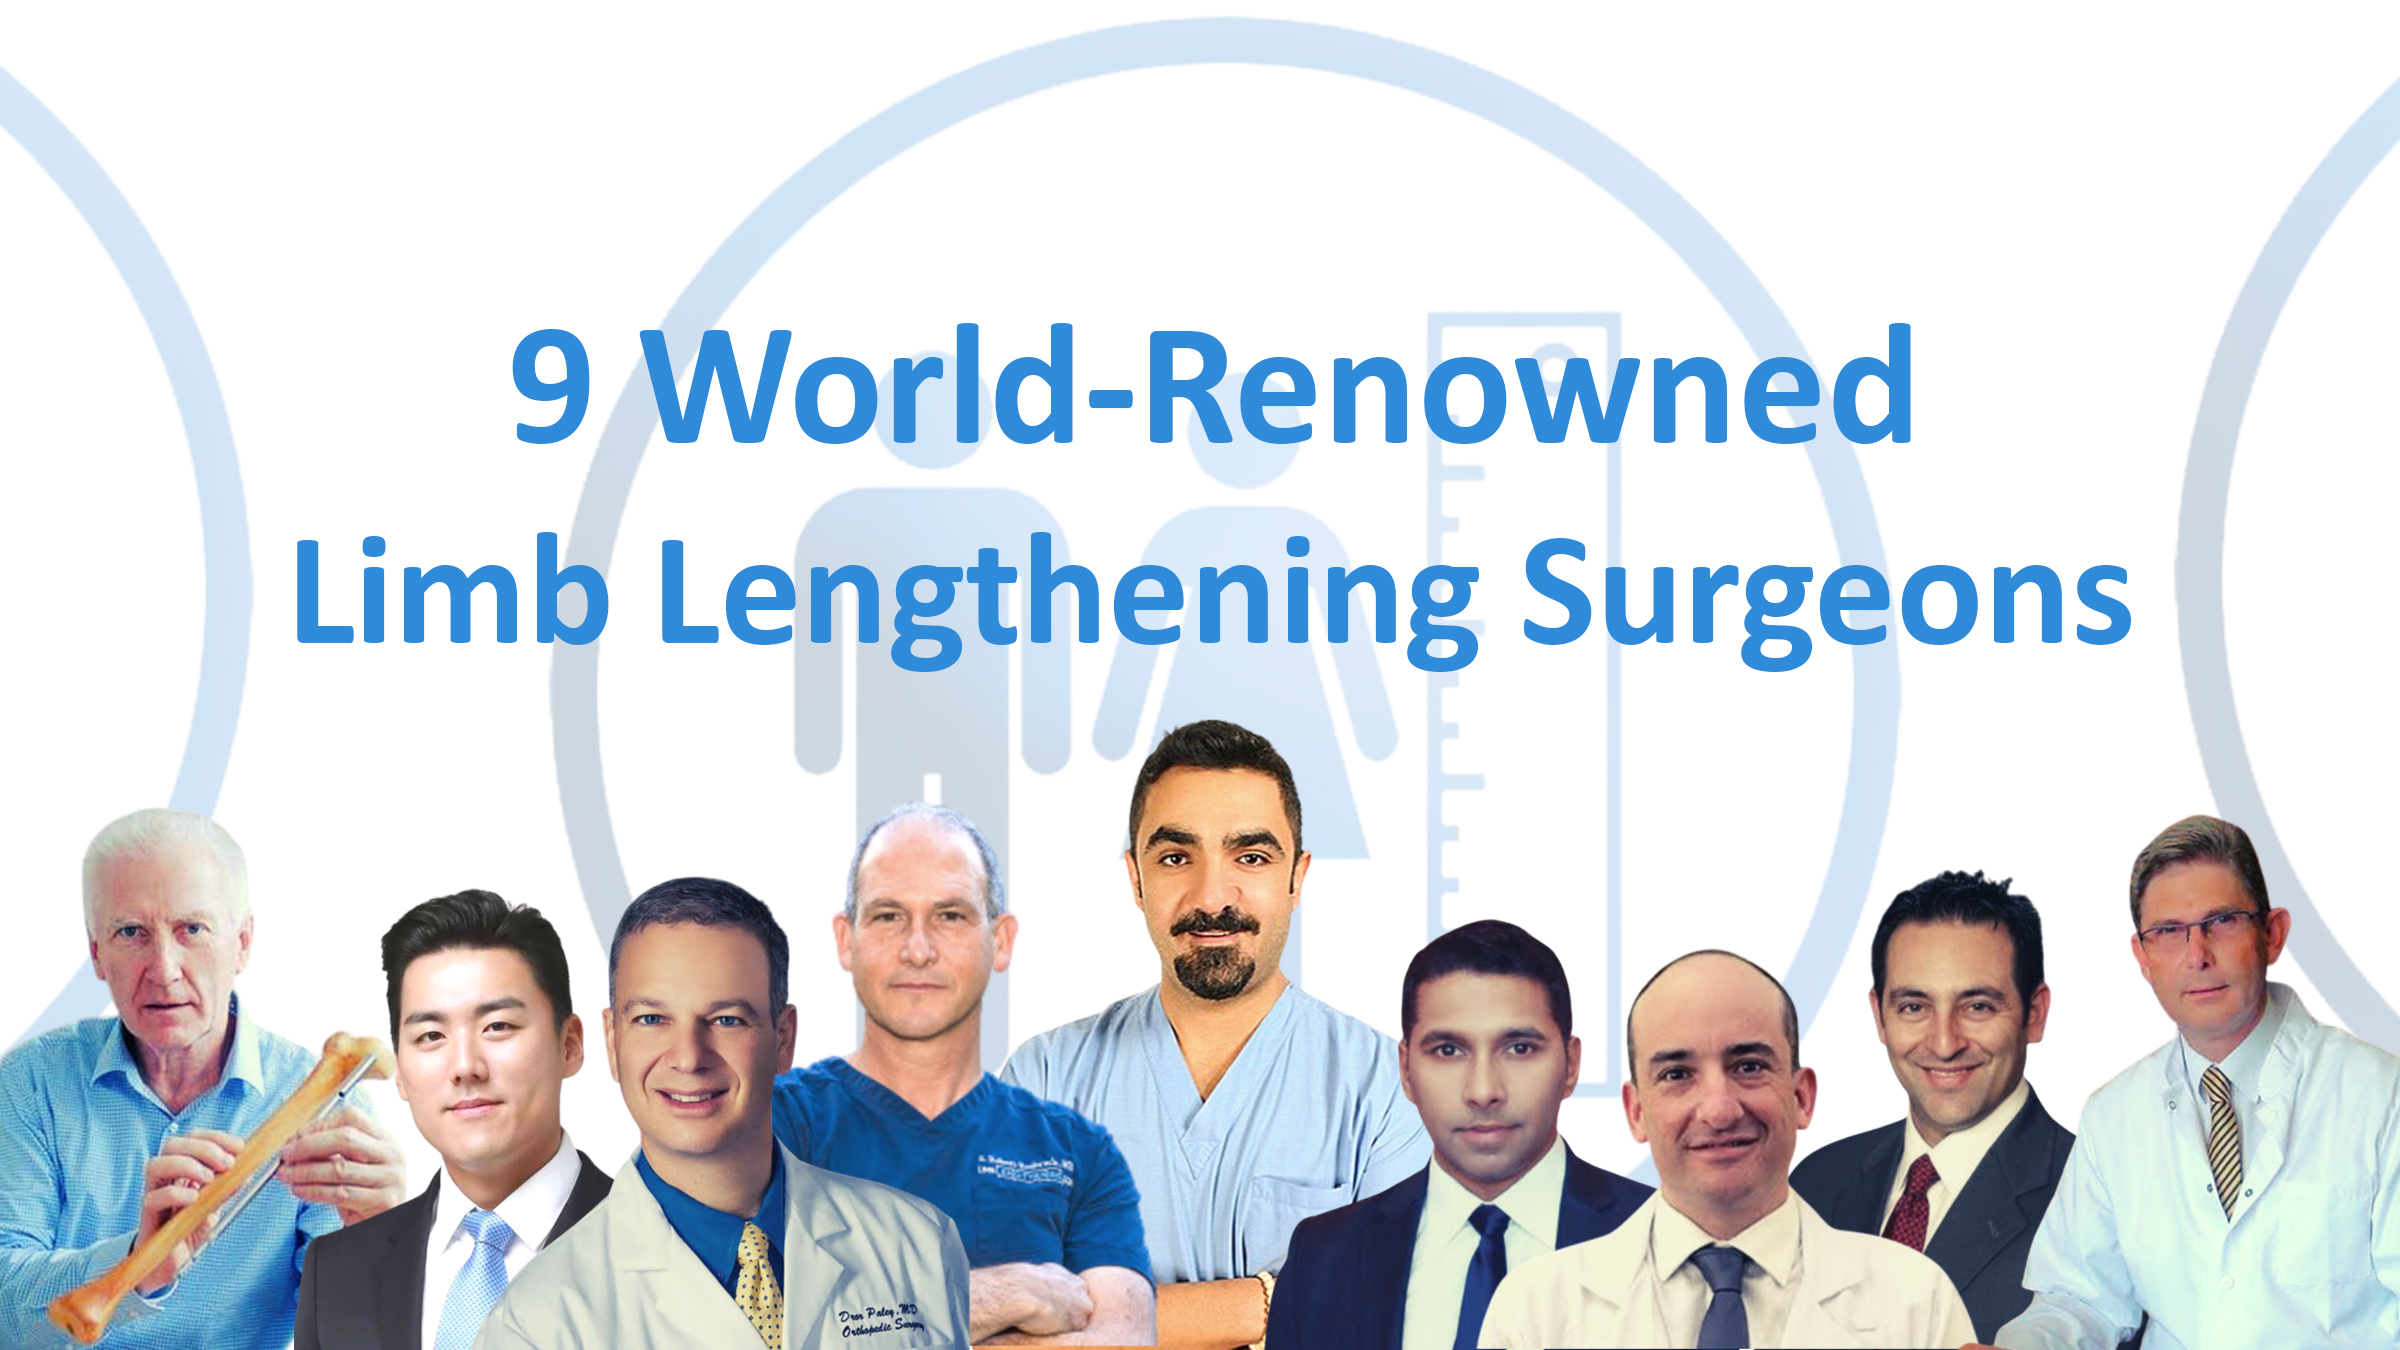 9 World-Renowned Limb Lengthening Surgeons